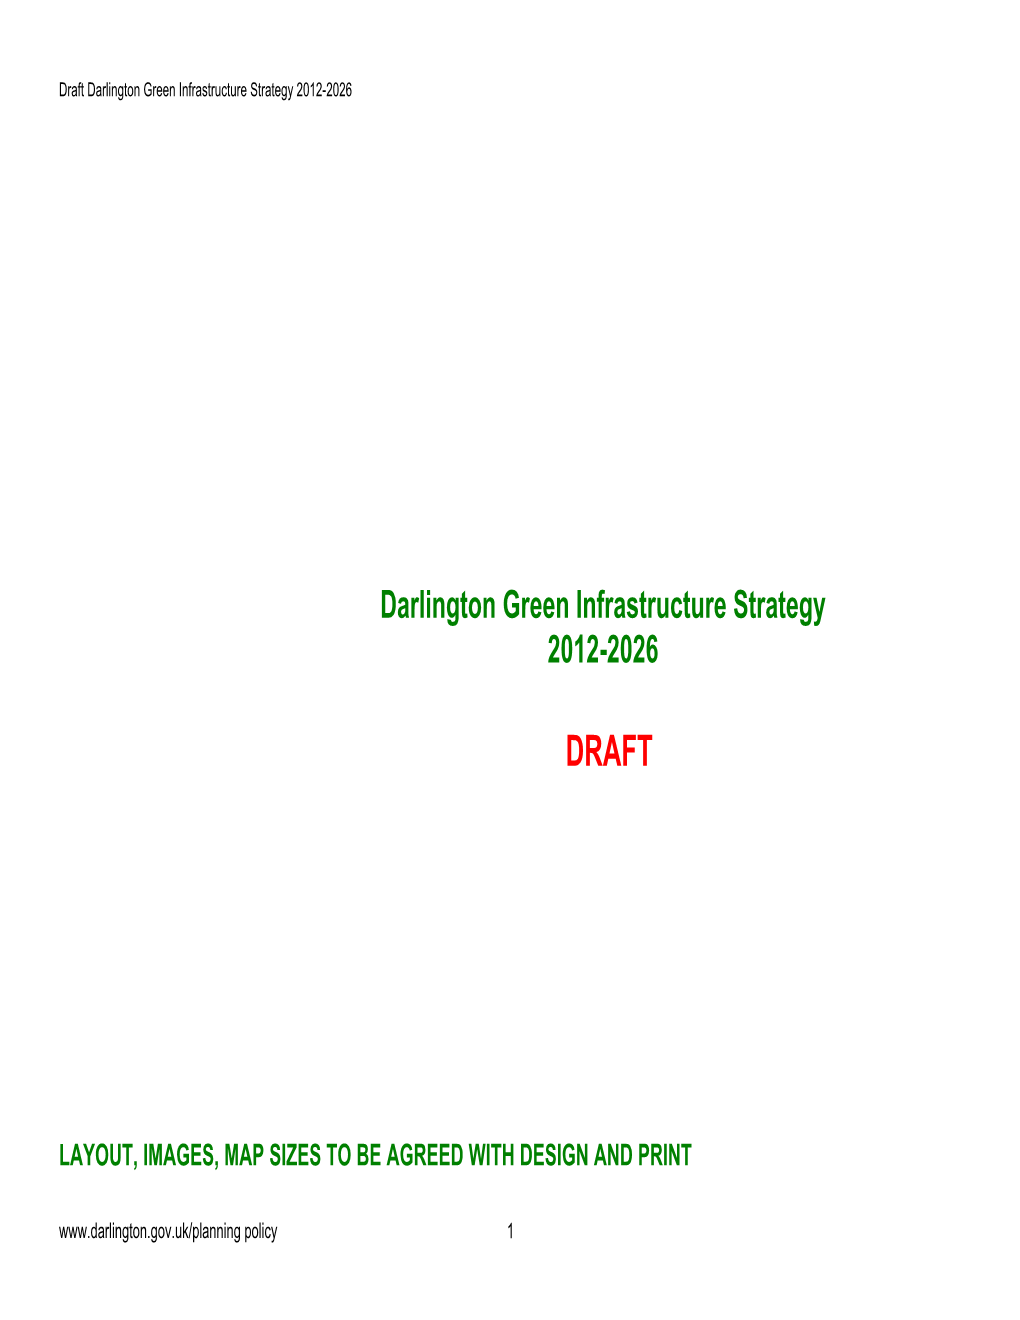 Darlington Green Infrastructure Strategy 2012-2026